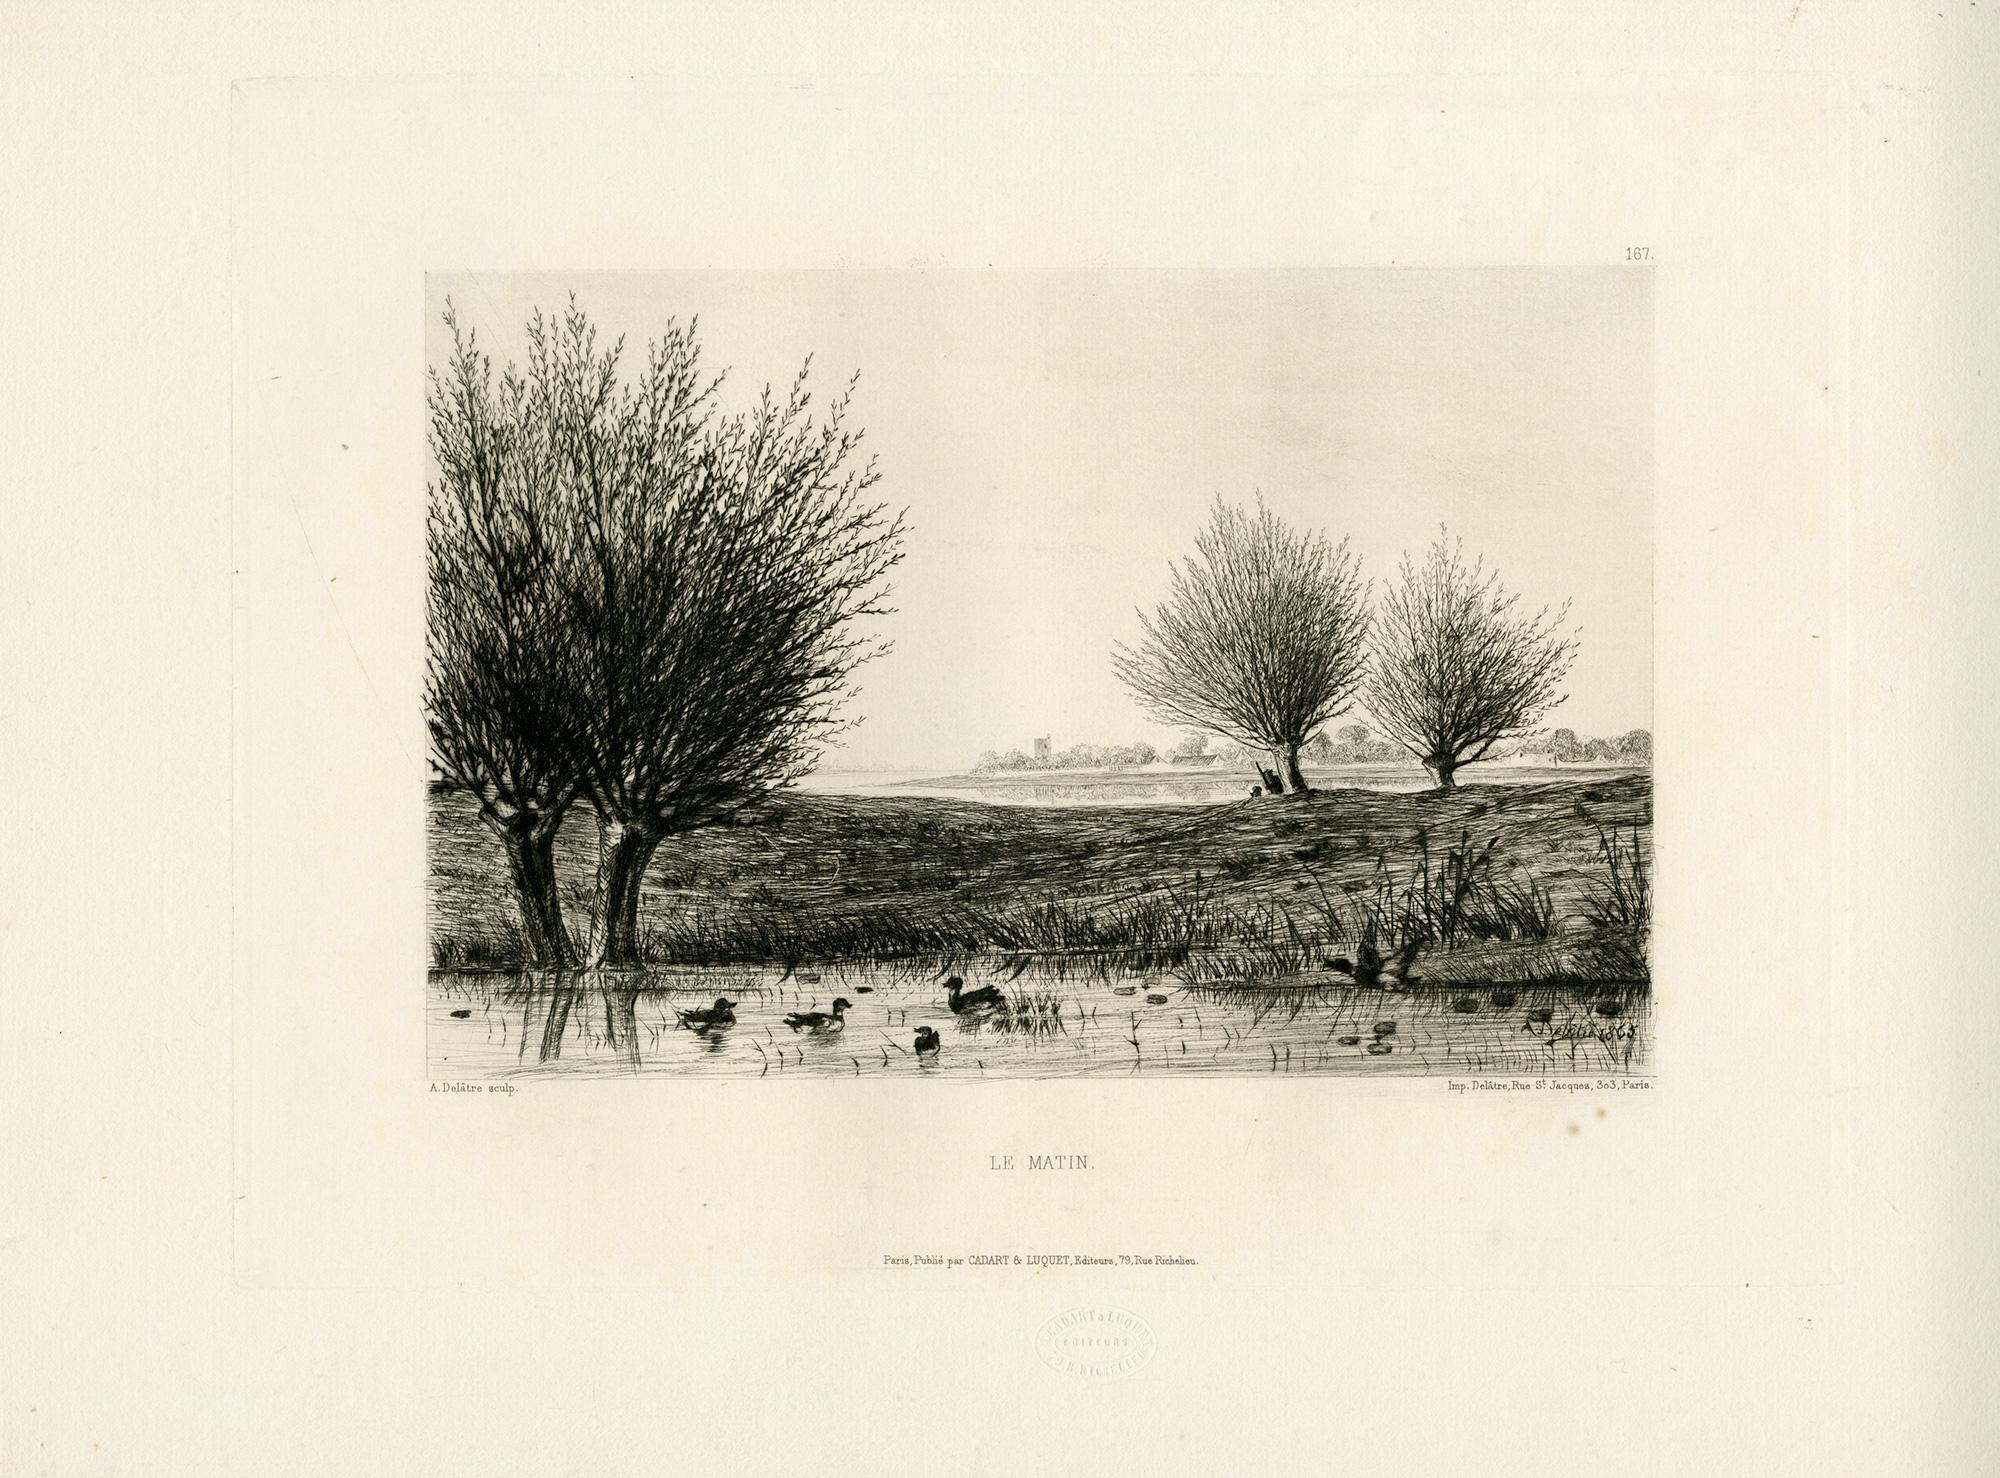 Le Matin - Print by Auguste Delâtre